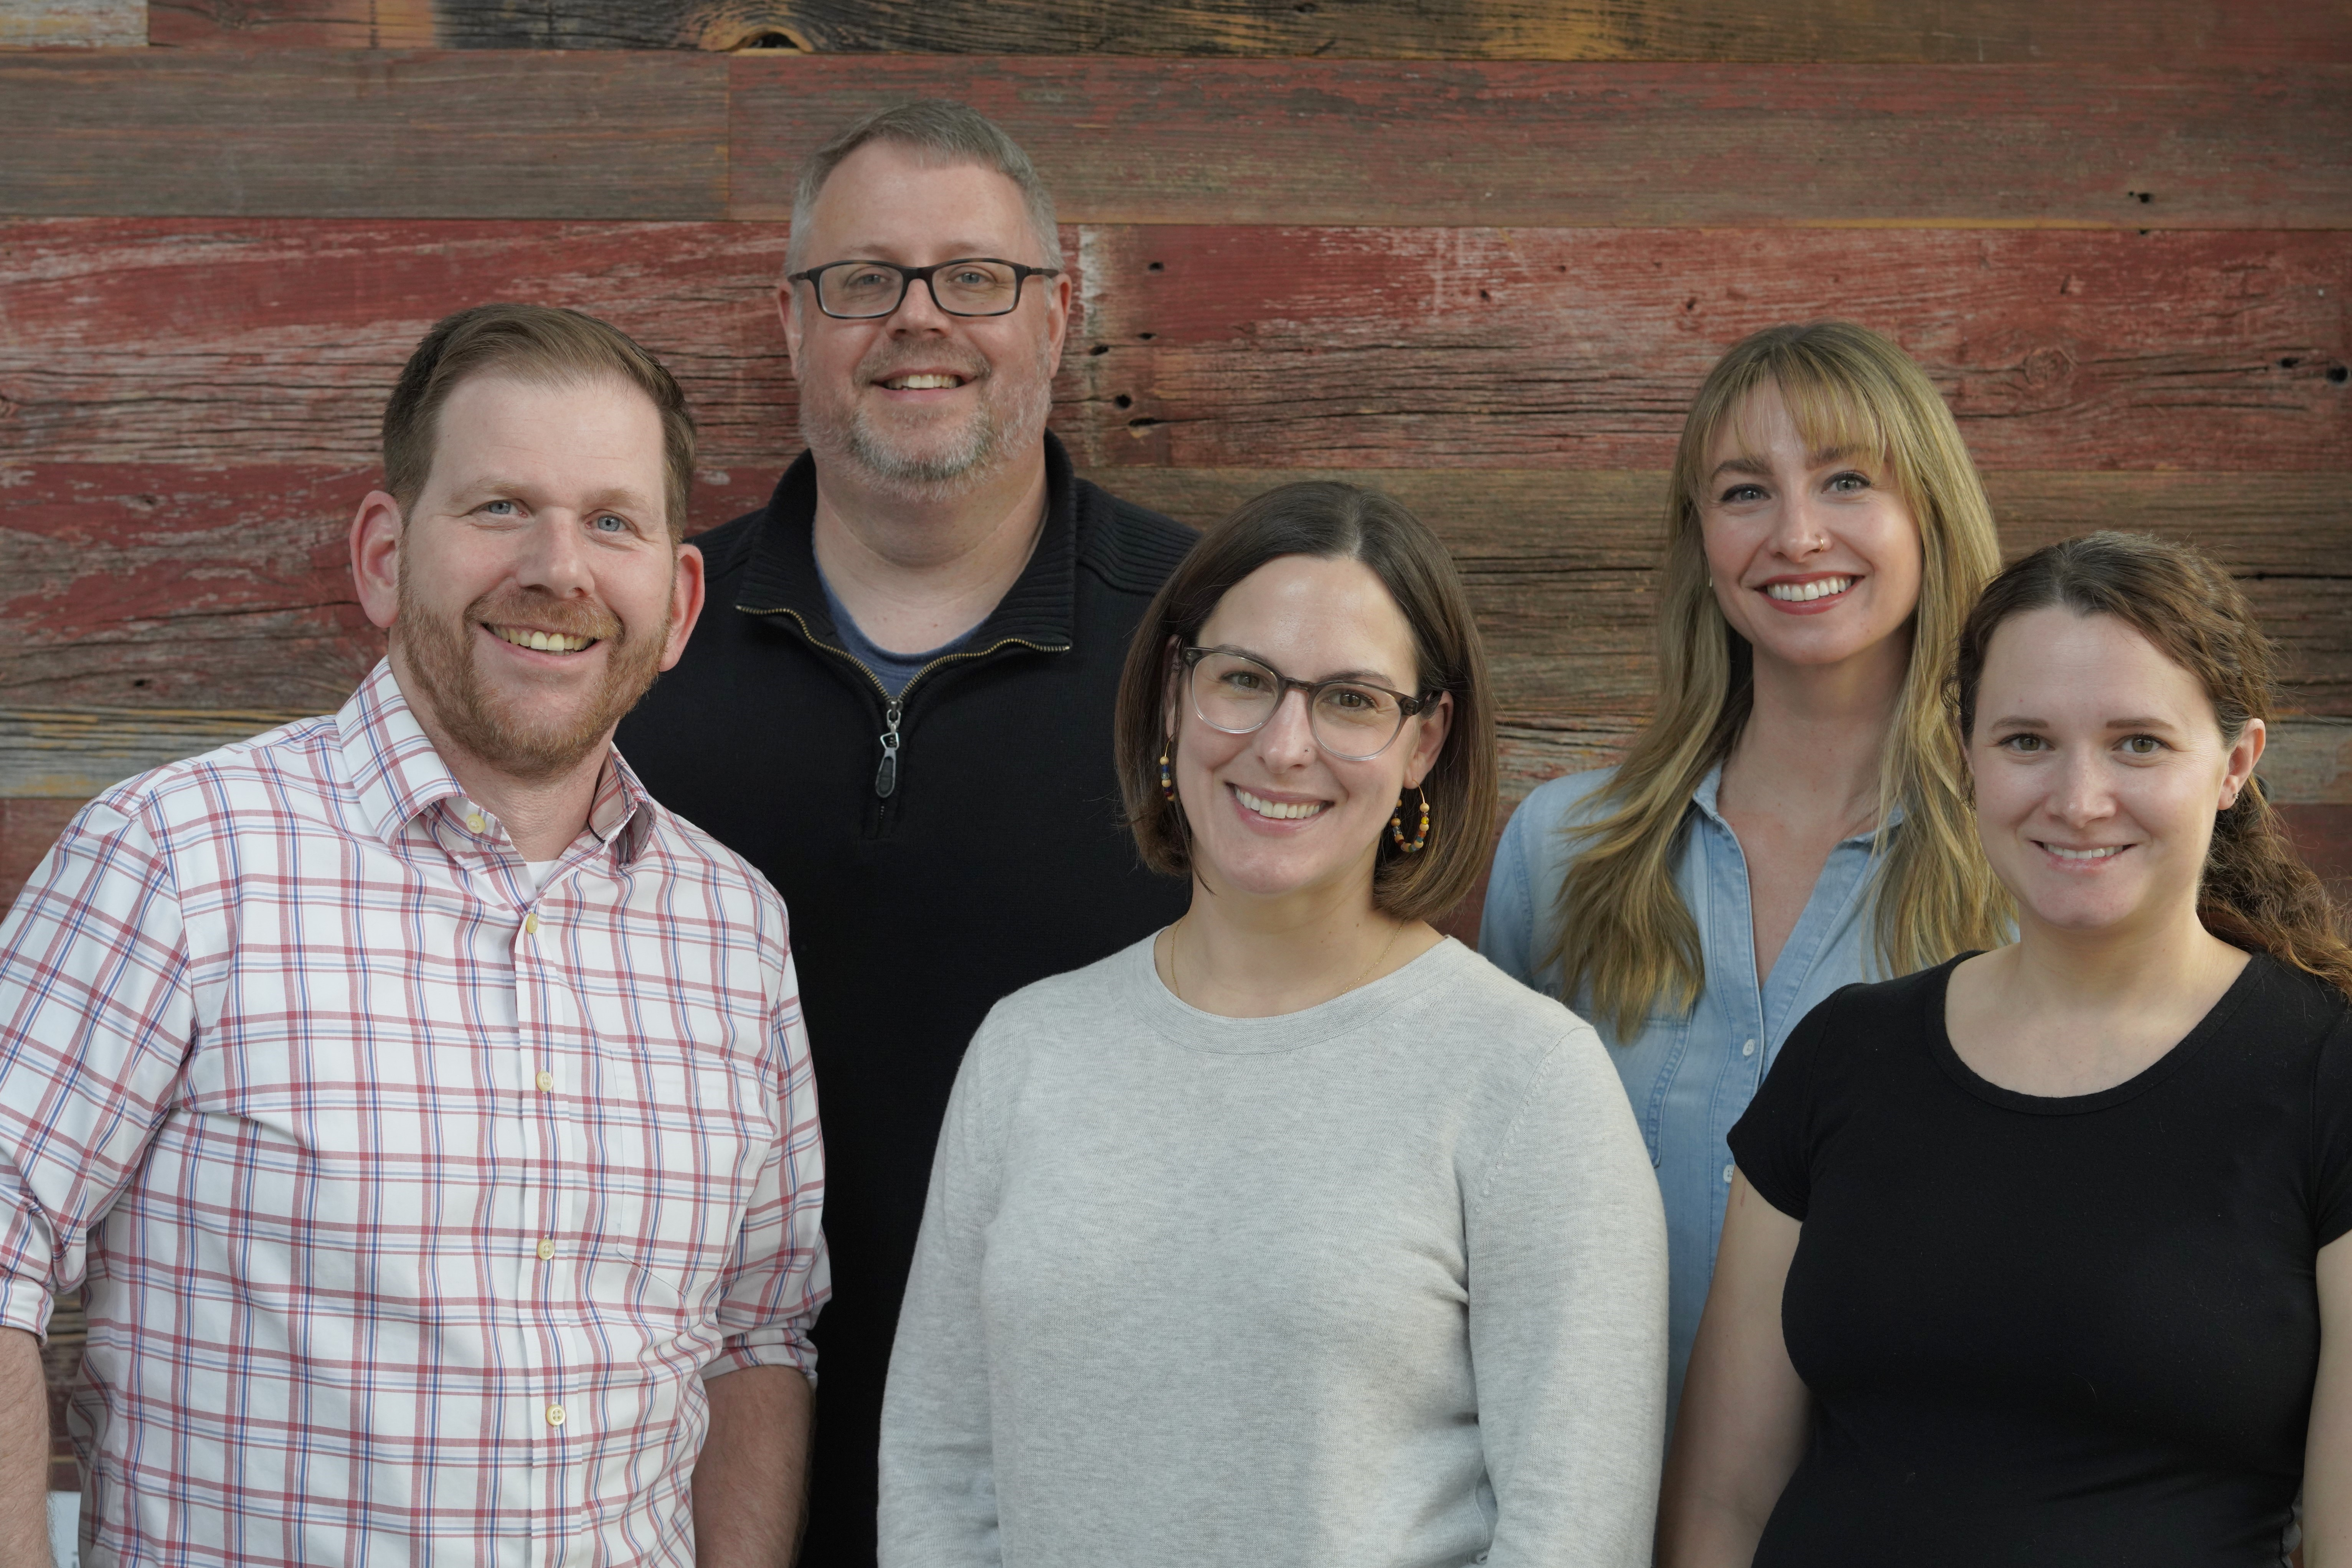 Iowa-based venture studio Novy adds 2 new hires, seeks startup applicants